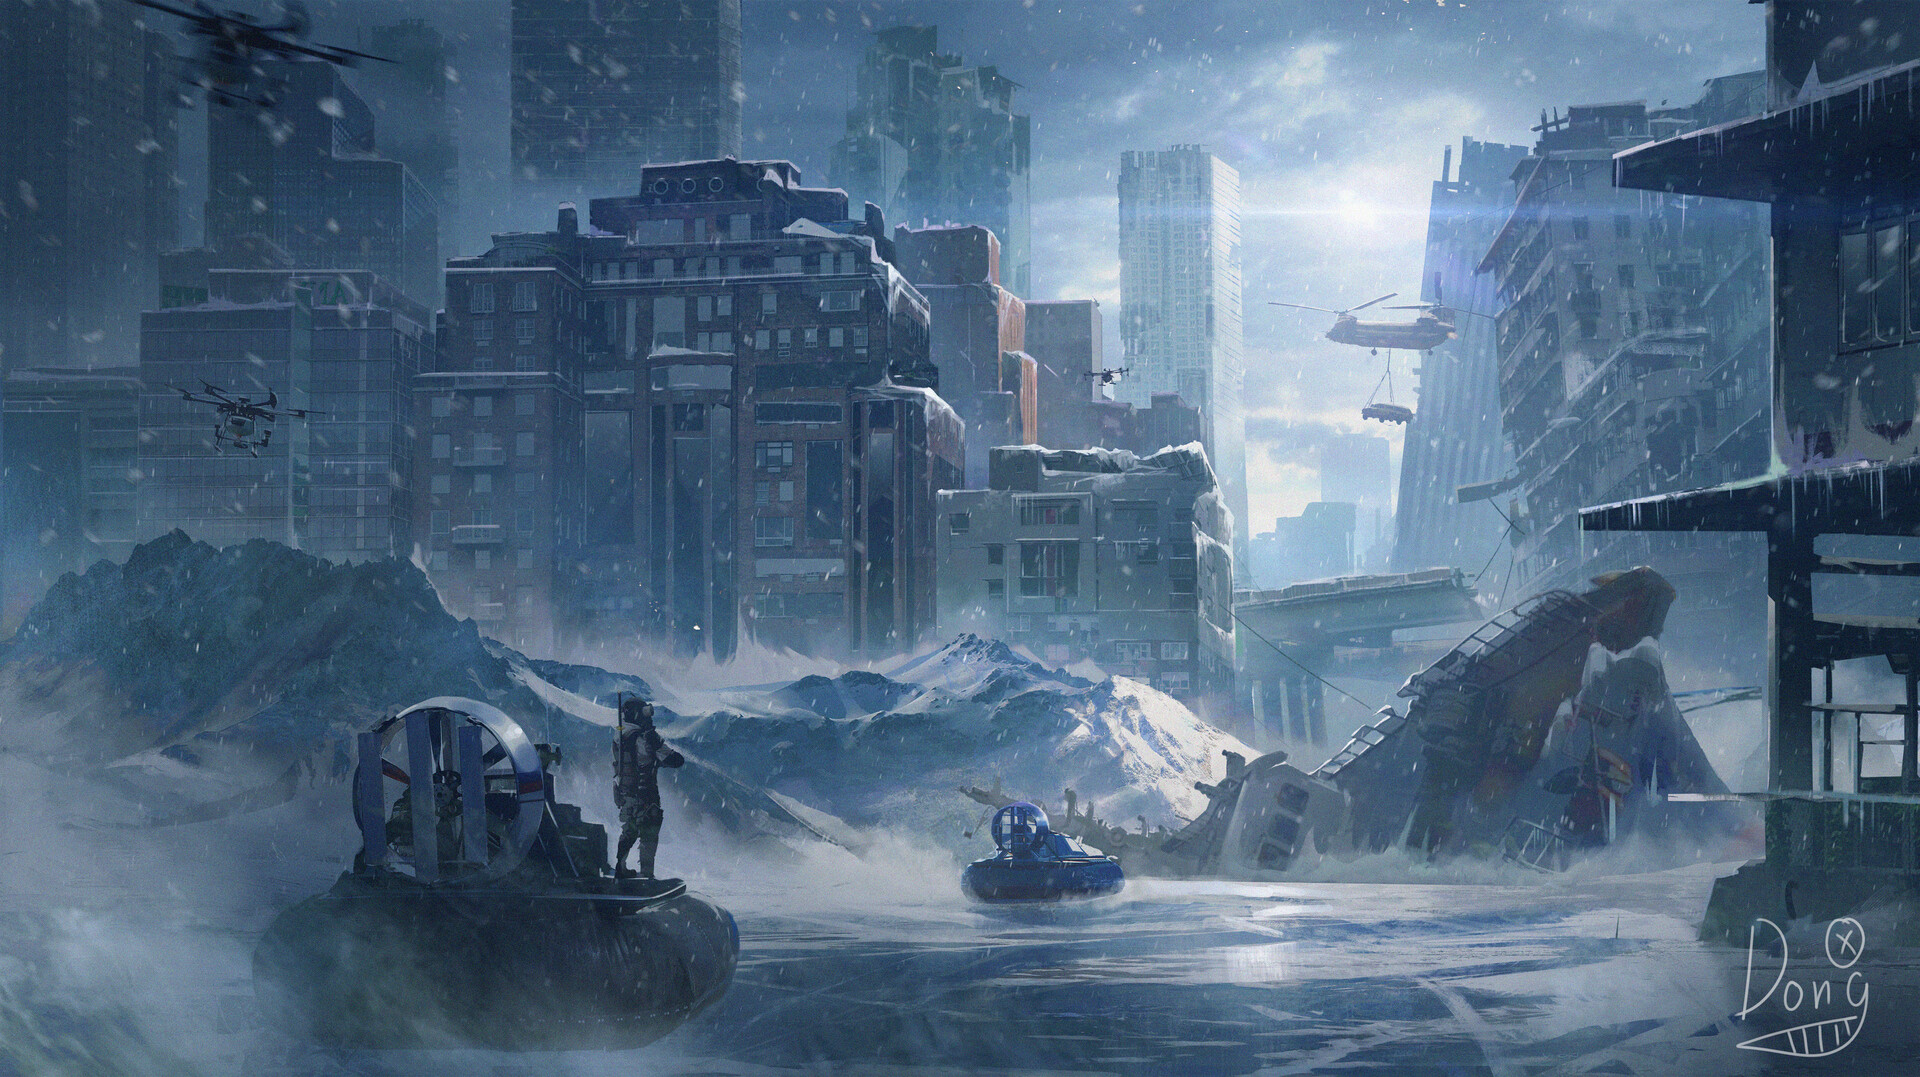 Игру frozen city